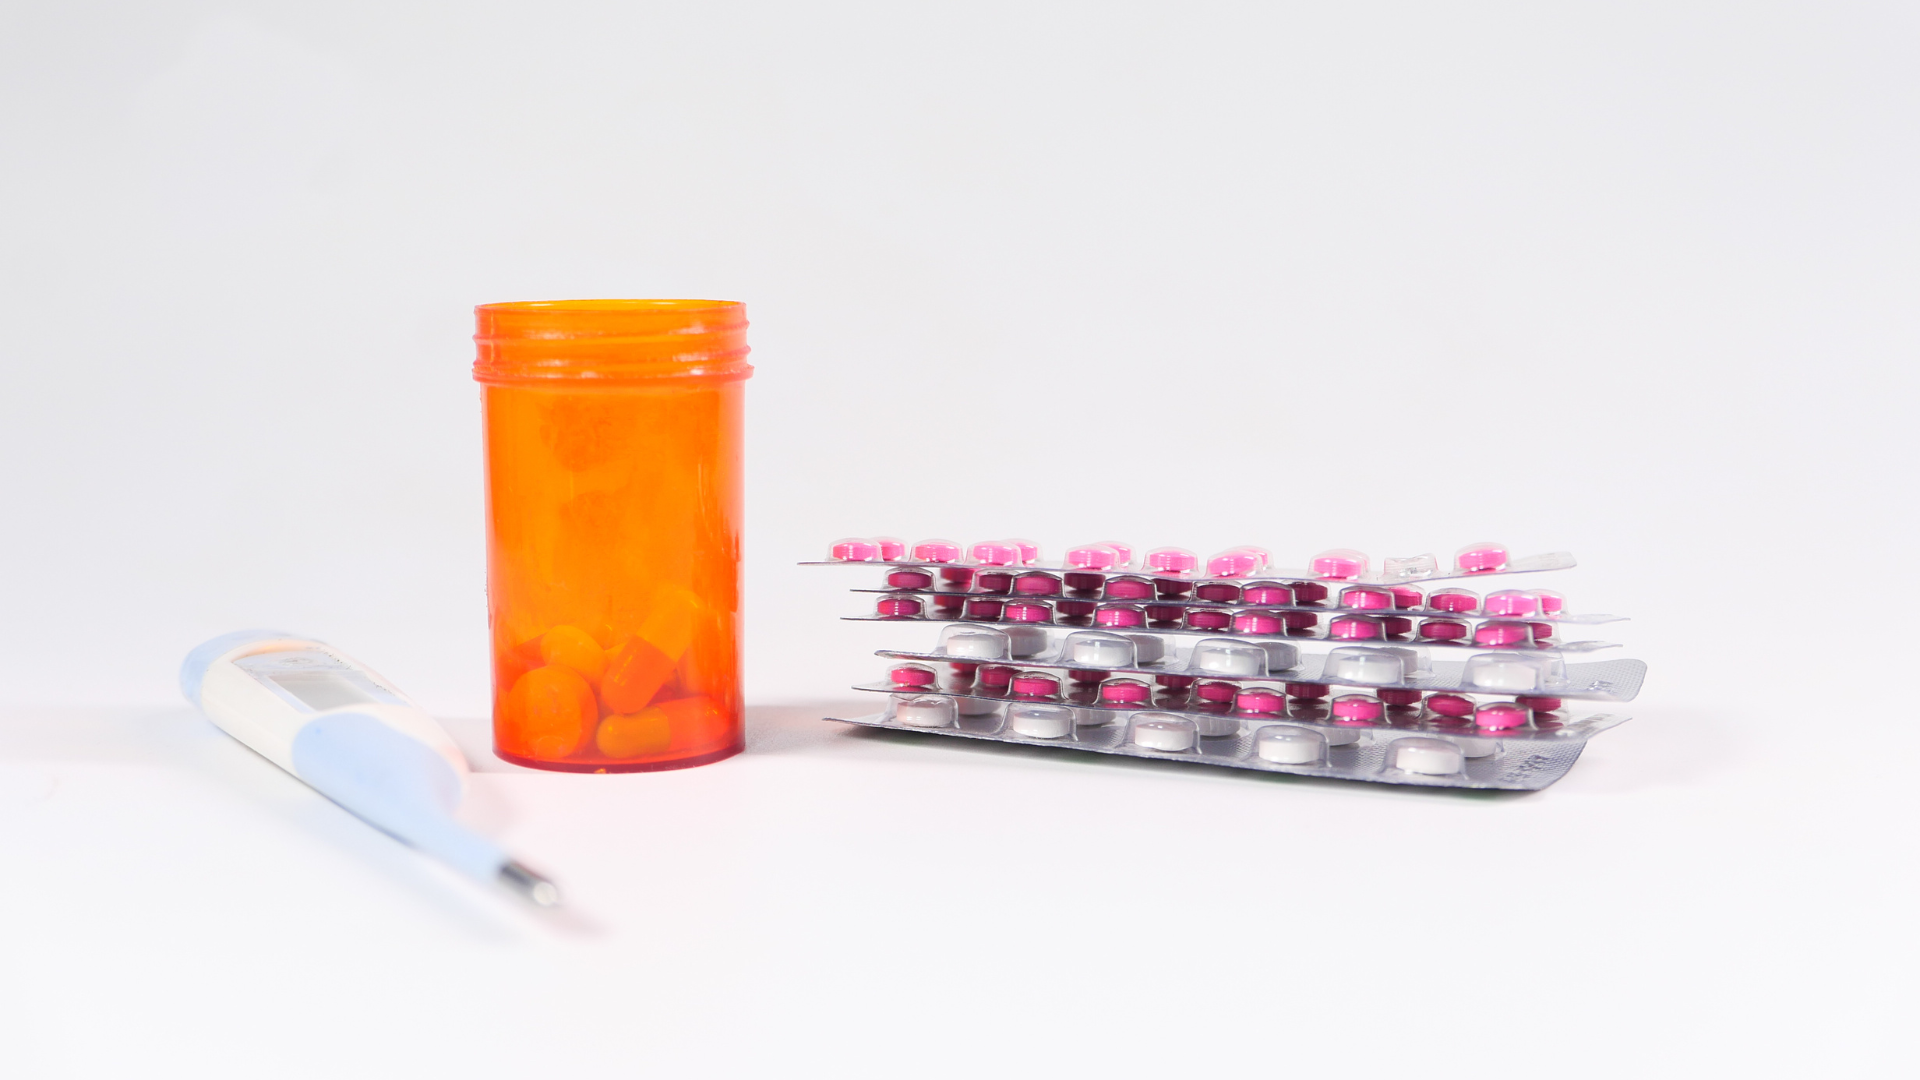 Blister pack medication and drugs in an orange medication bottle